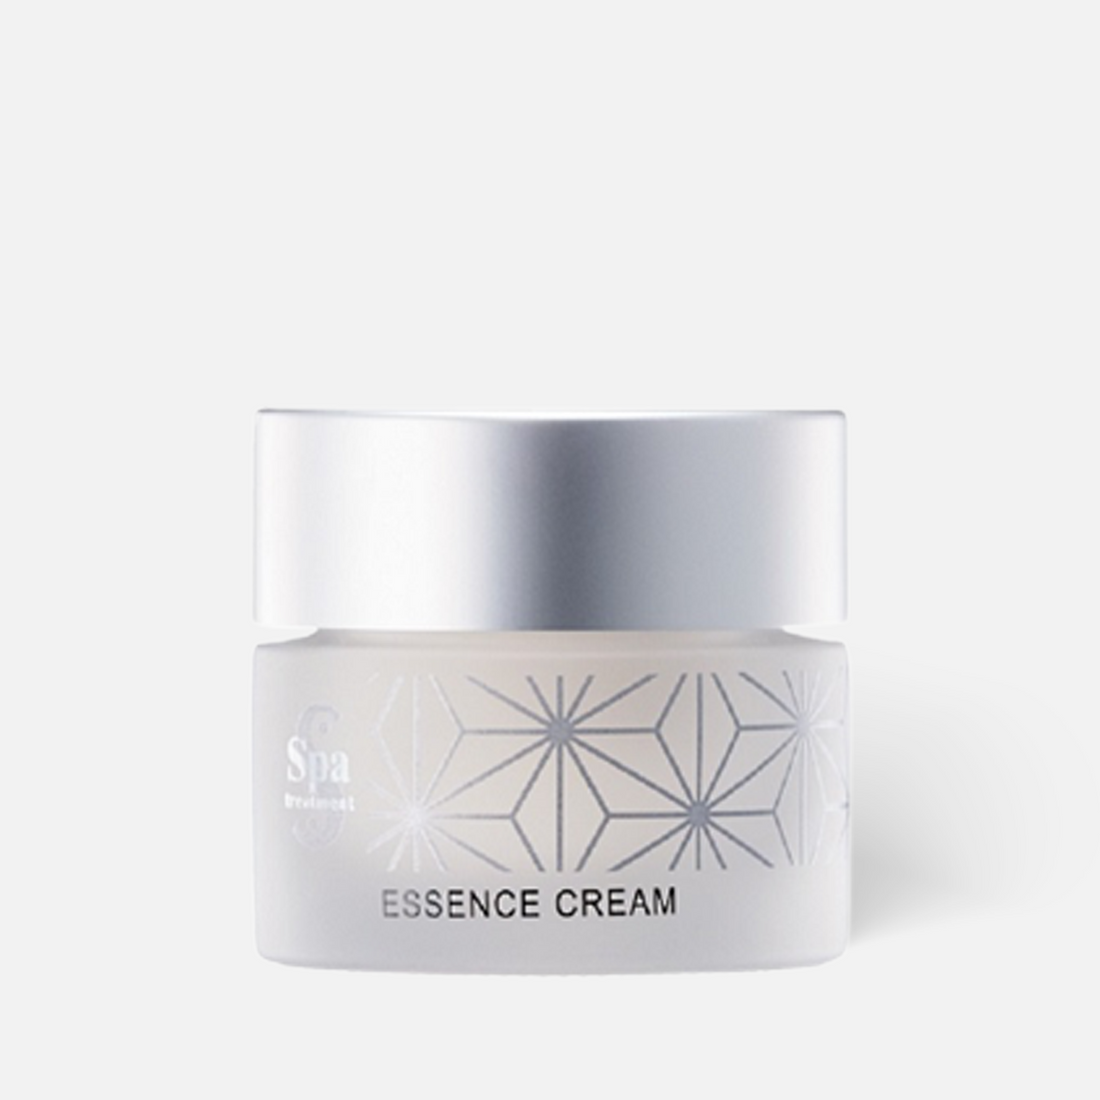 Spa Treatment Essence Cream 35g